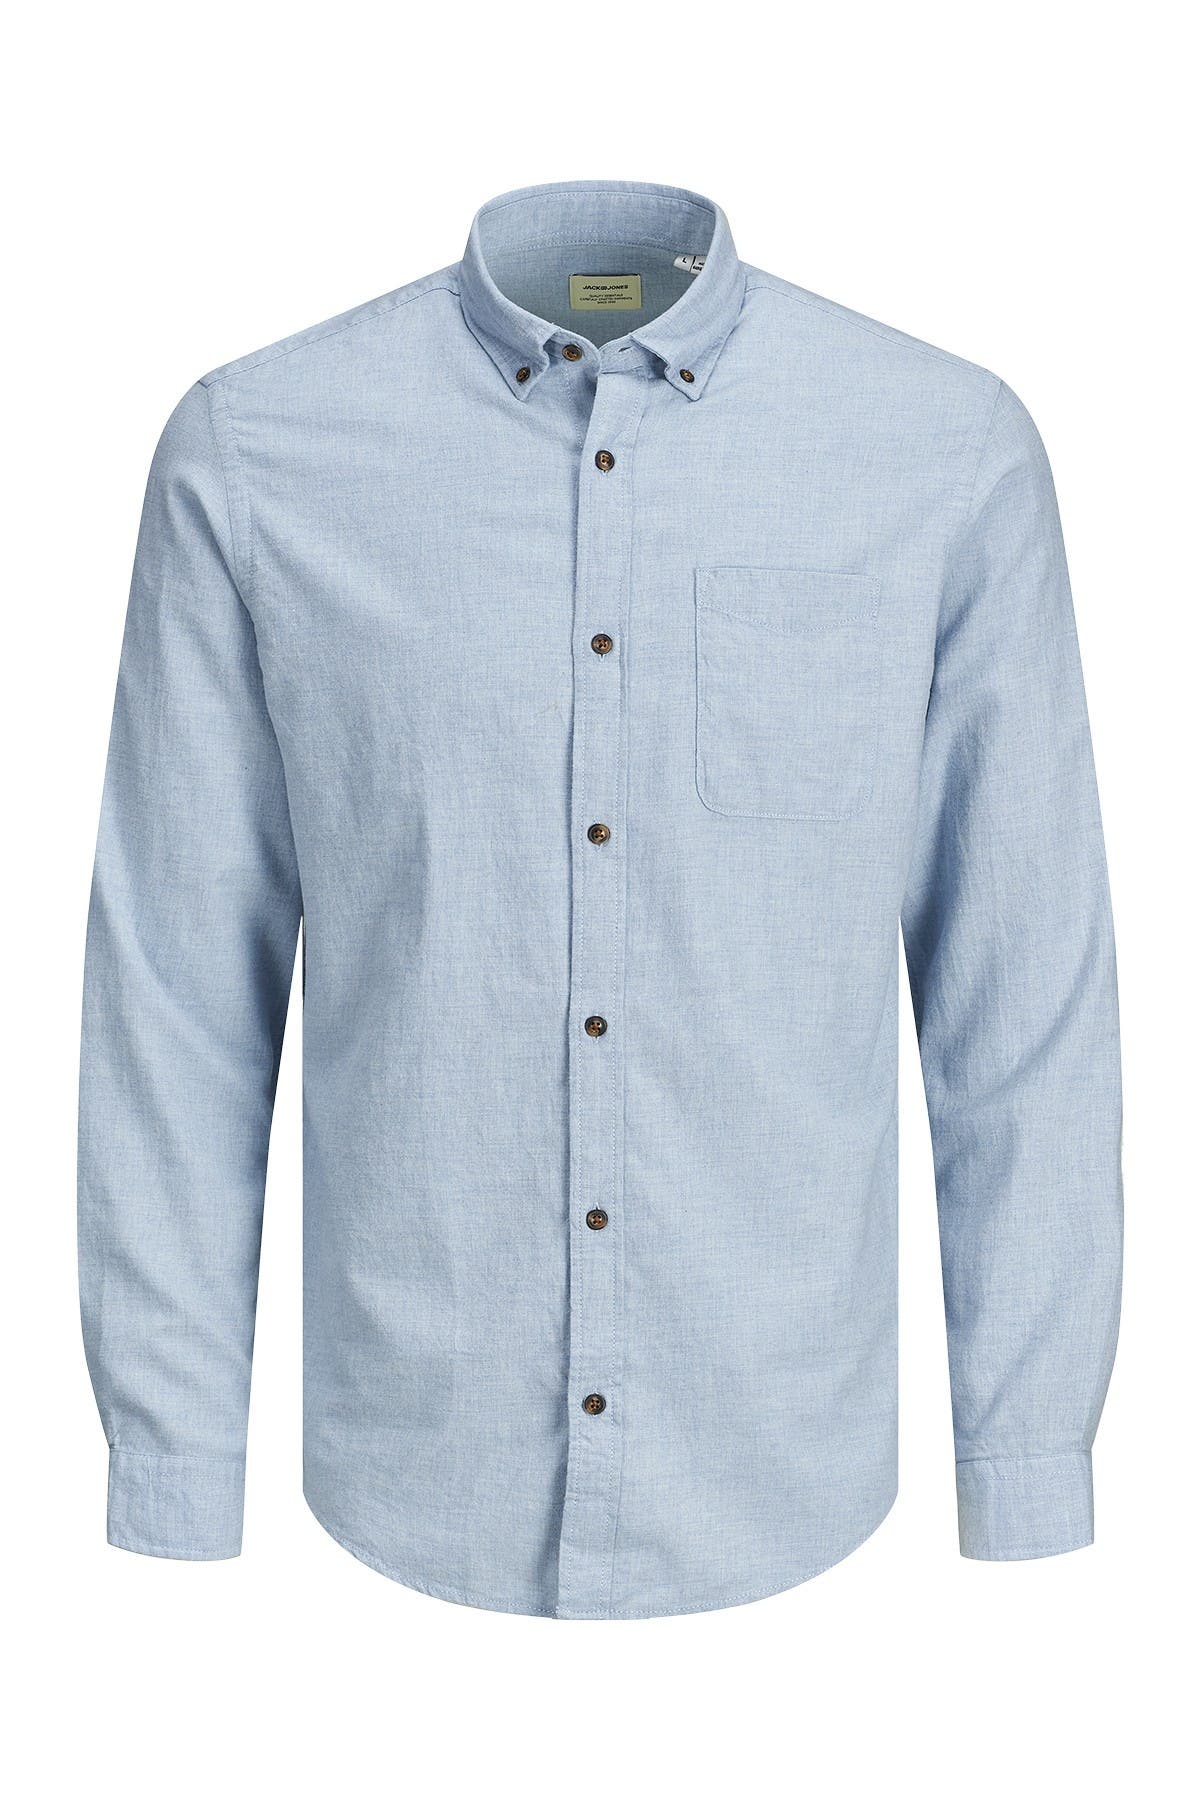 Jack & Jones Classic Melange Slim Fit Shirt In Light/pastel Blue4